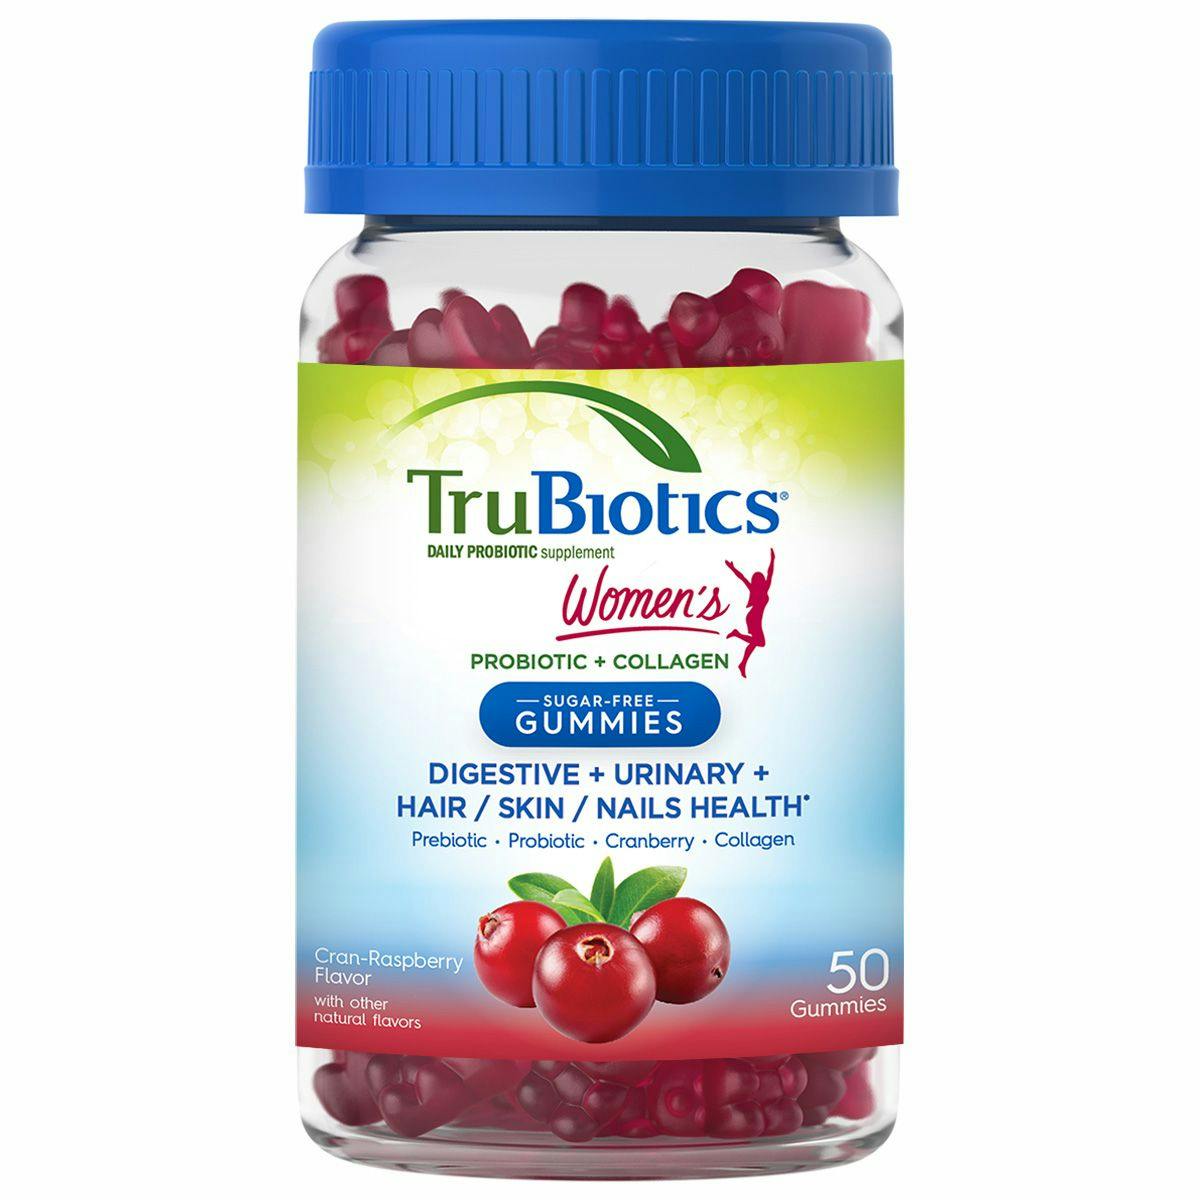 Photo of Women’s Probiotic + Collagen Sugar-Free Gummies from TruBiotics.